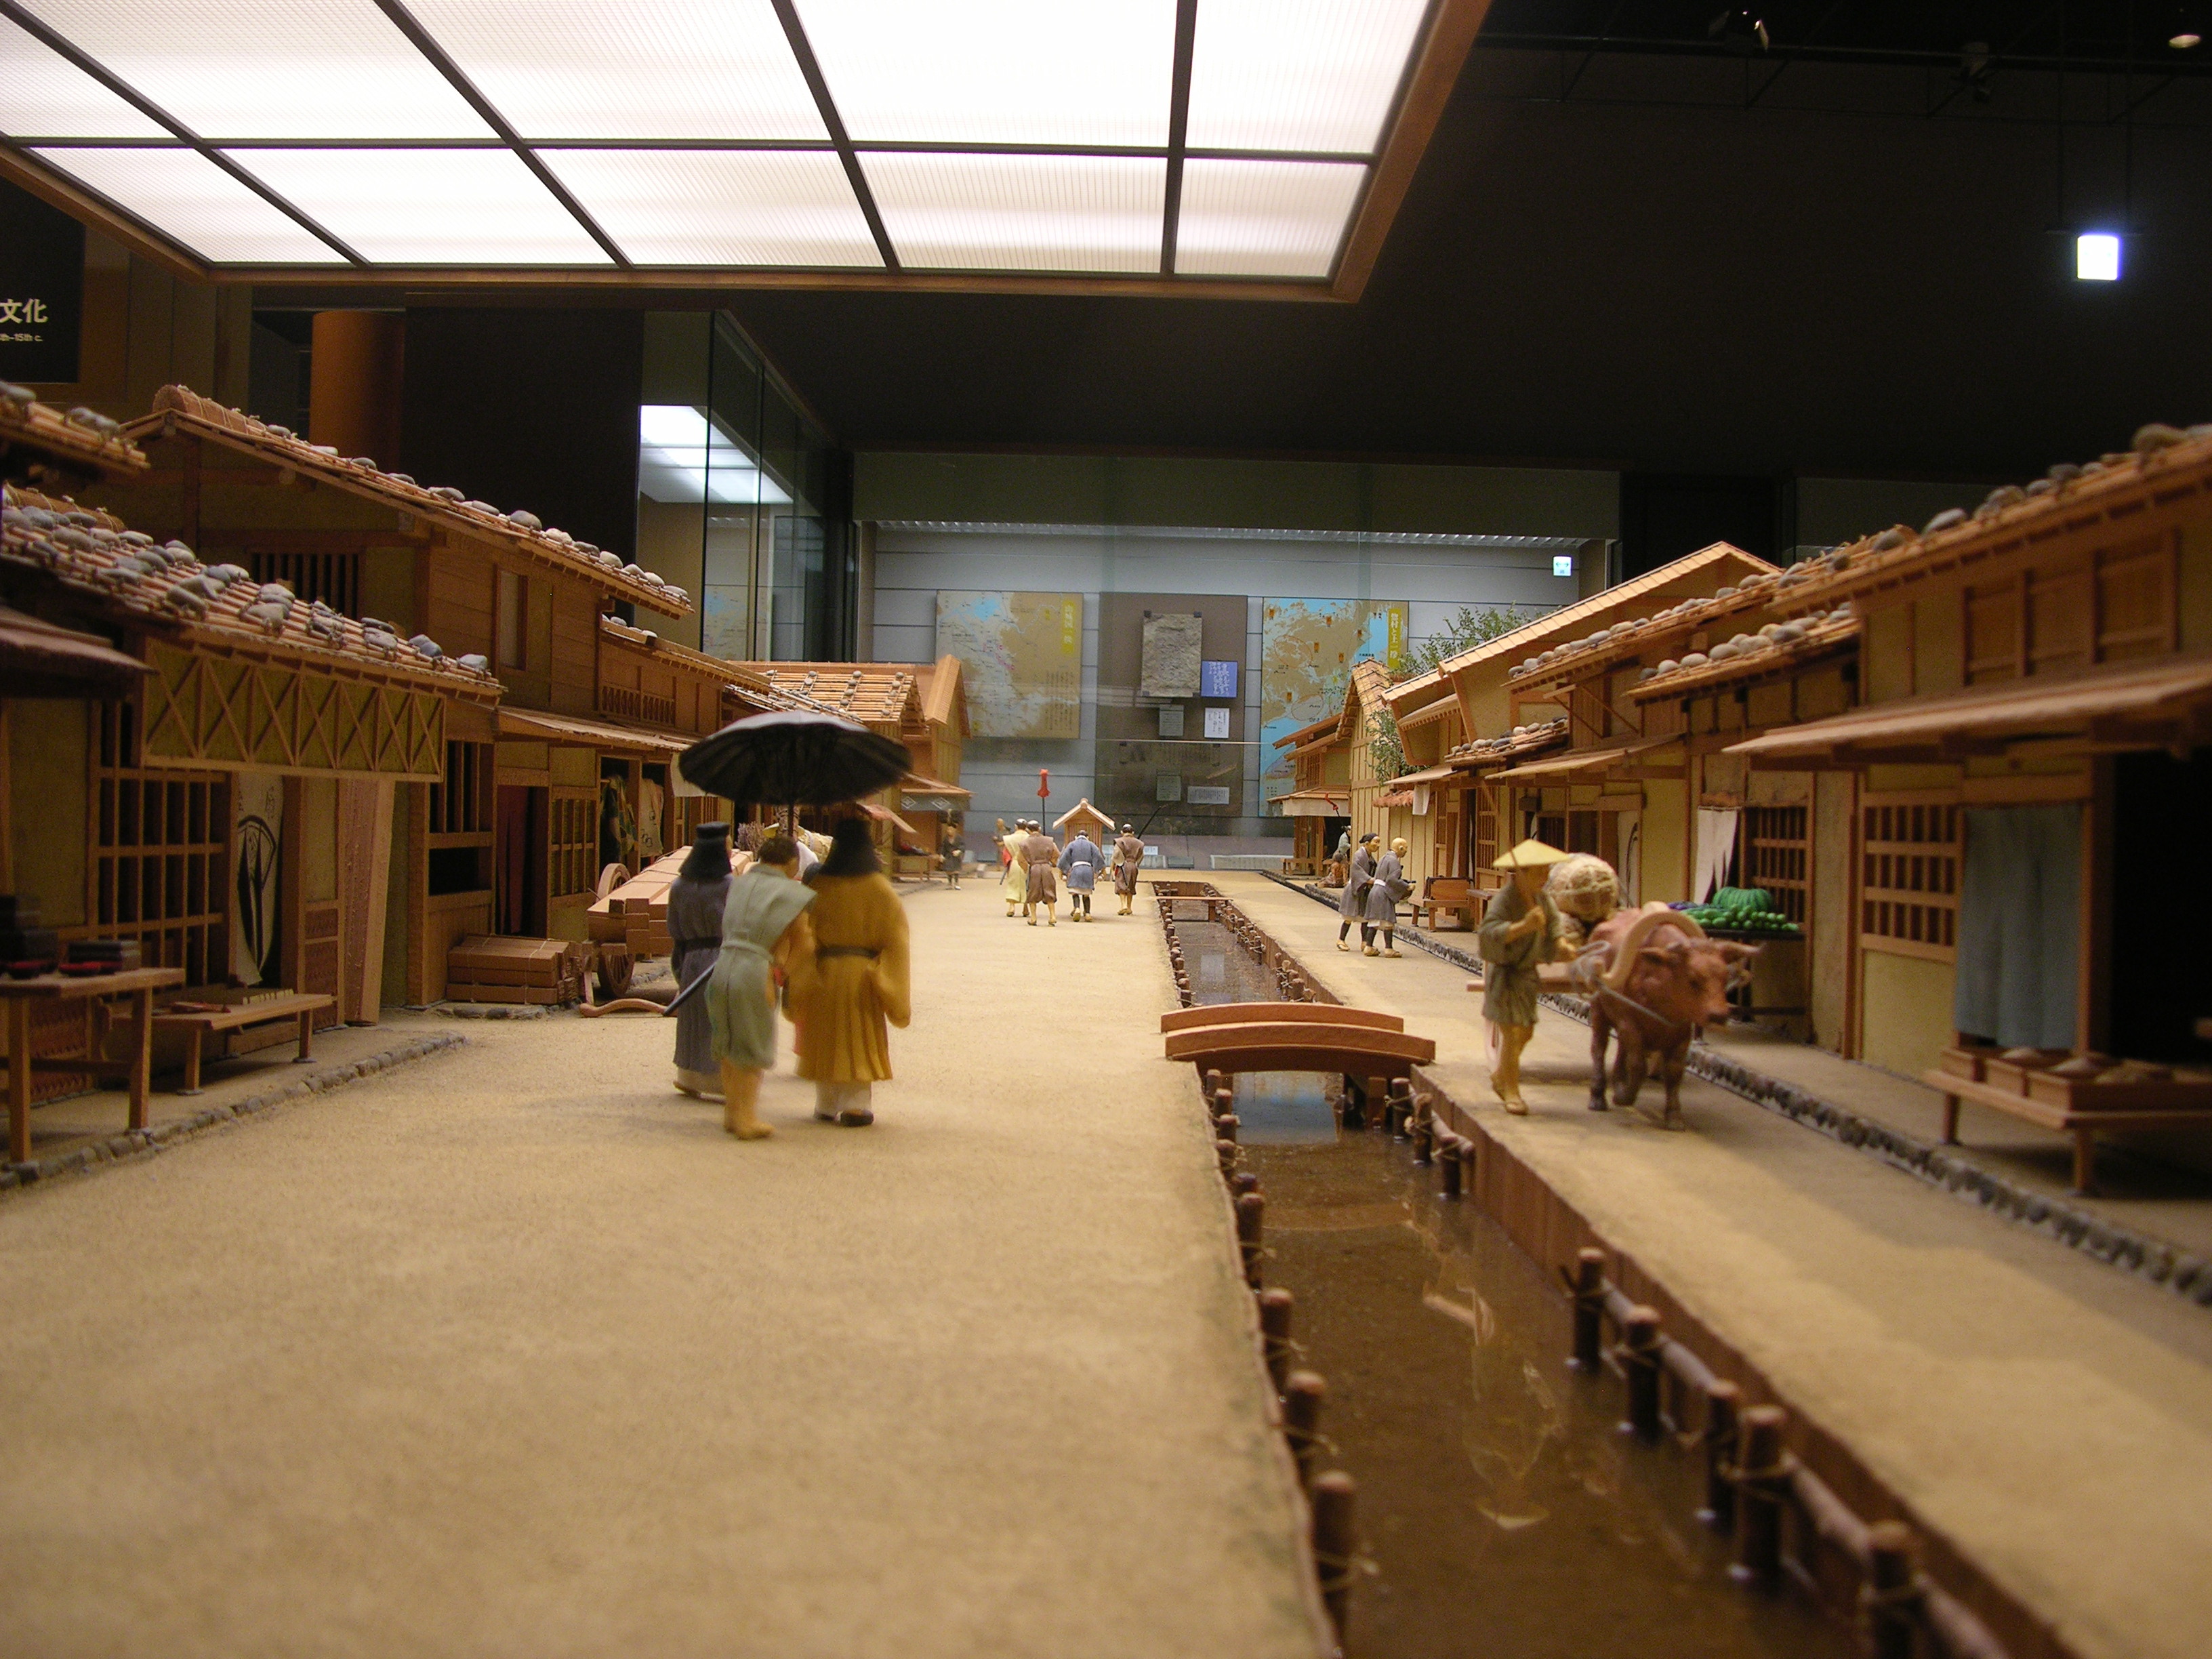 музеи японии